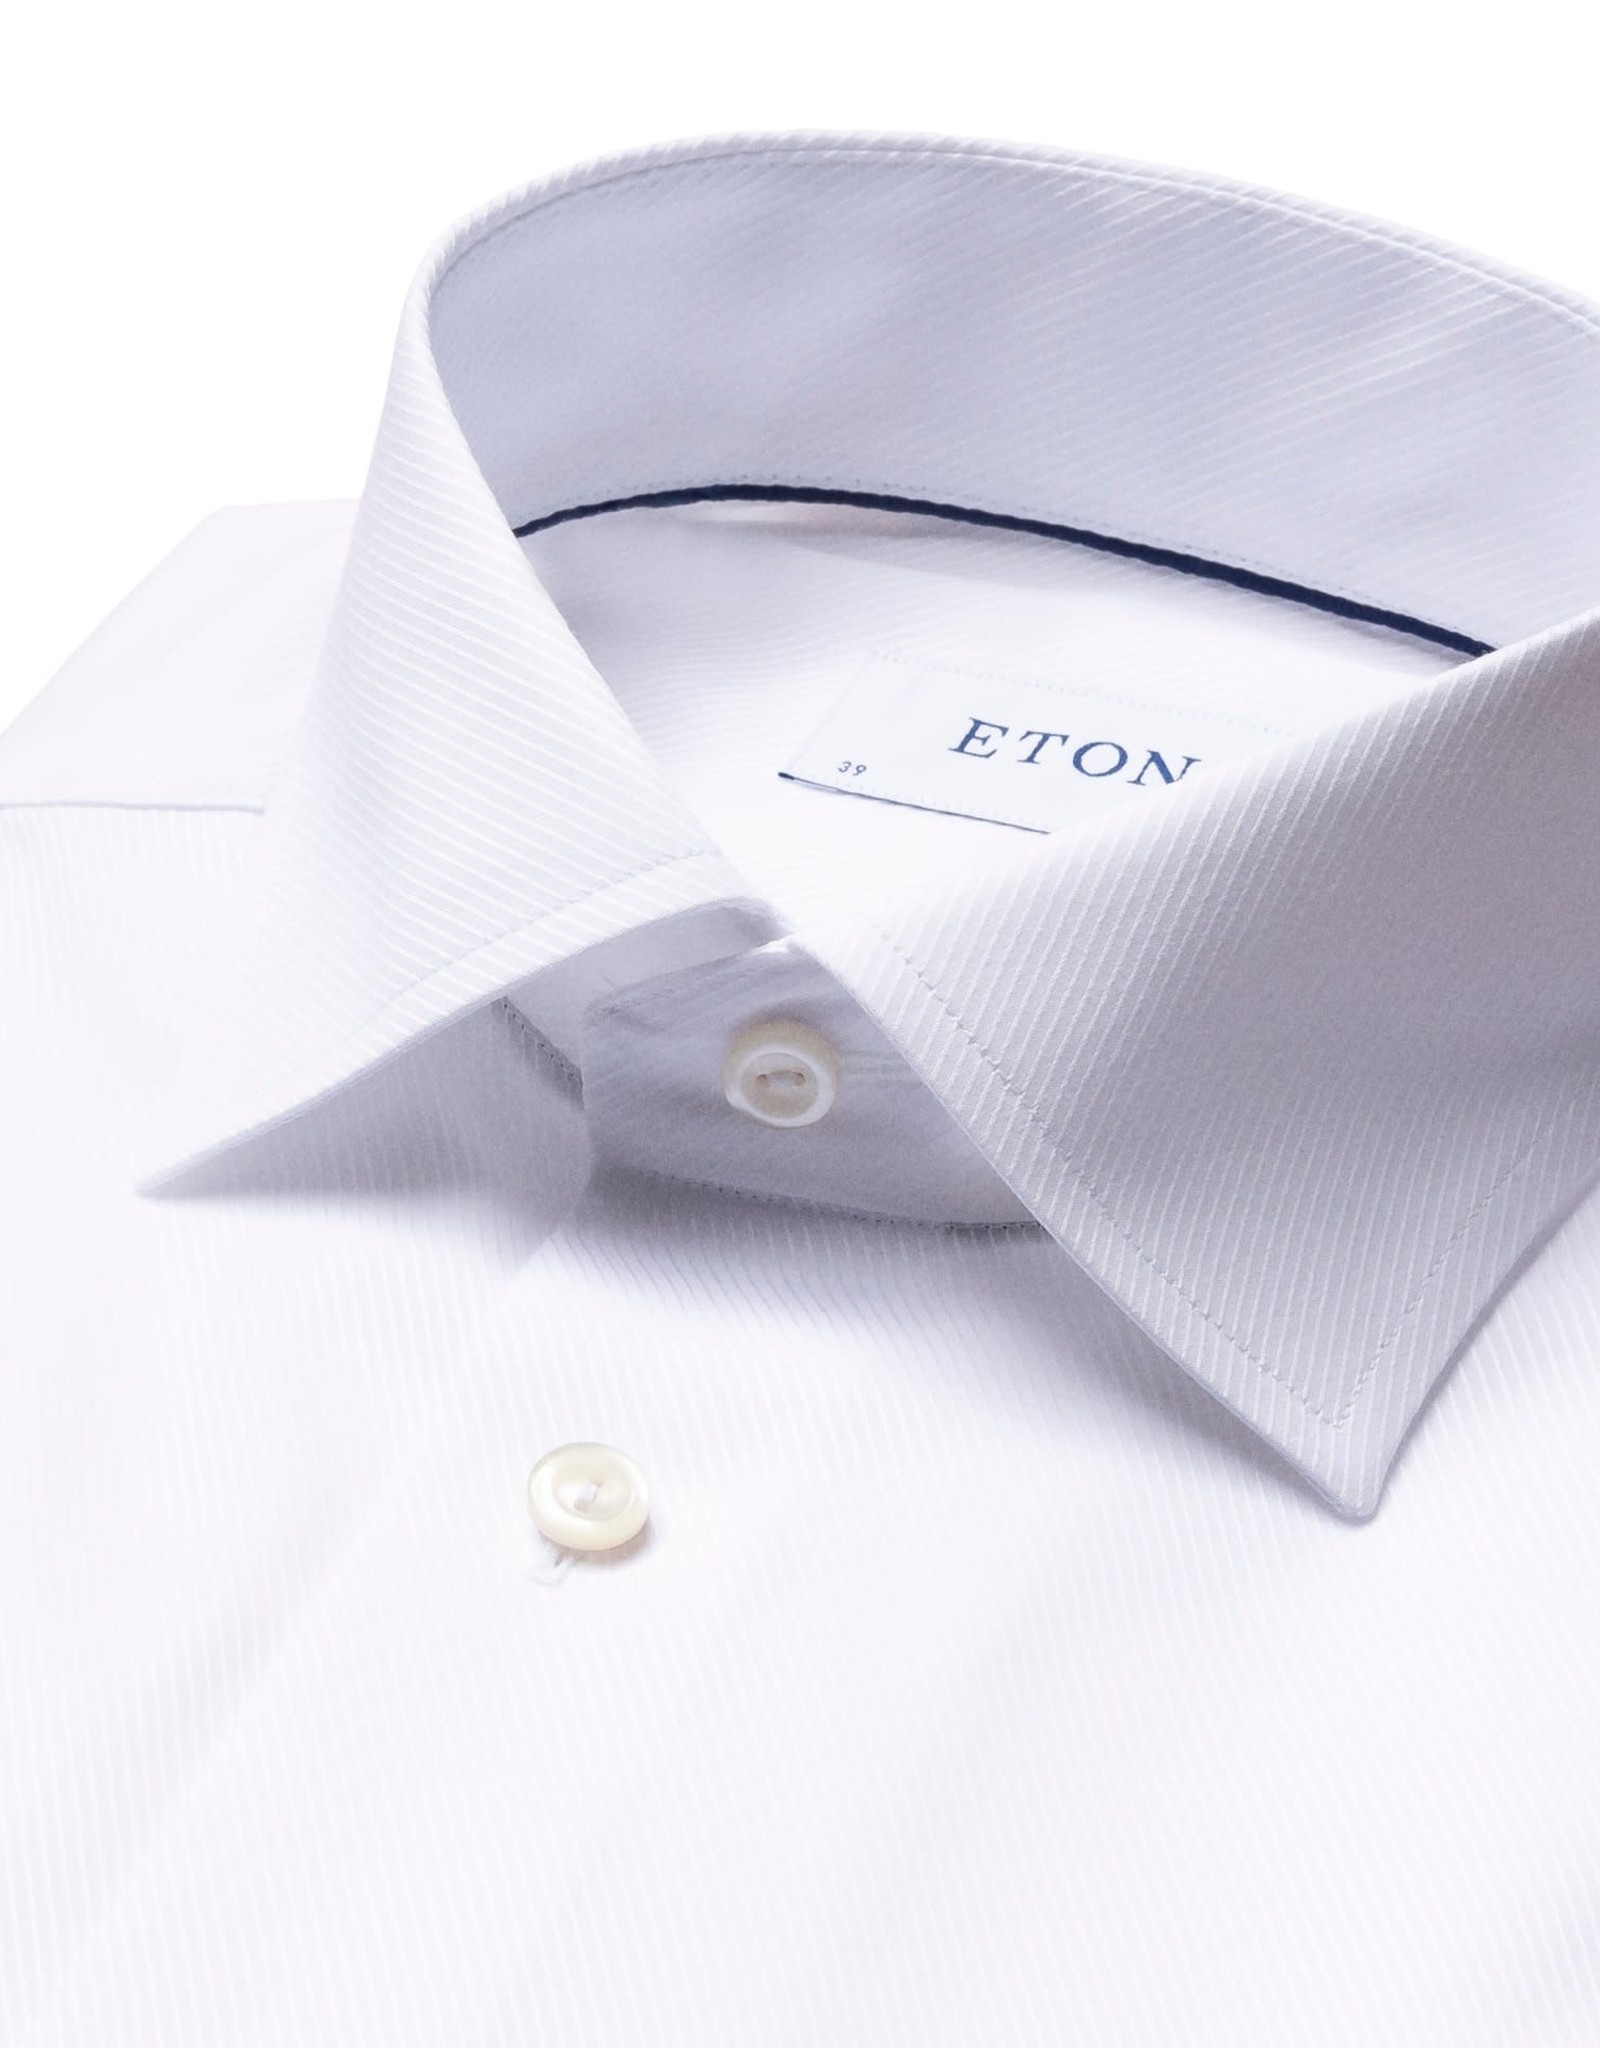 Eton Eton hemd wit Contemporary 1774/01